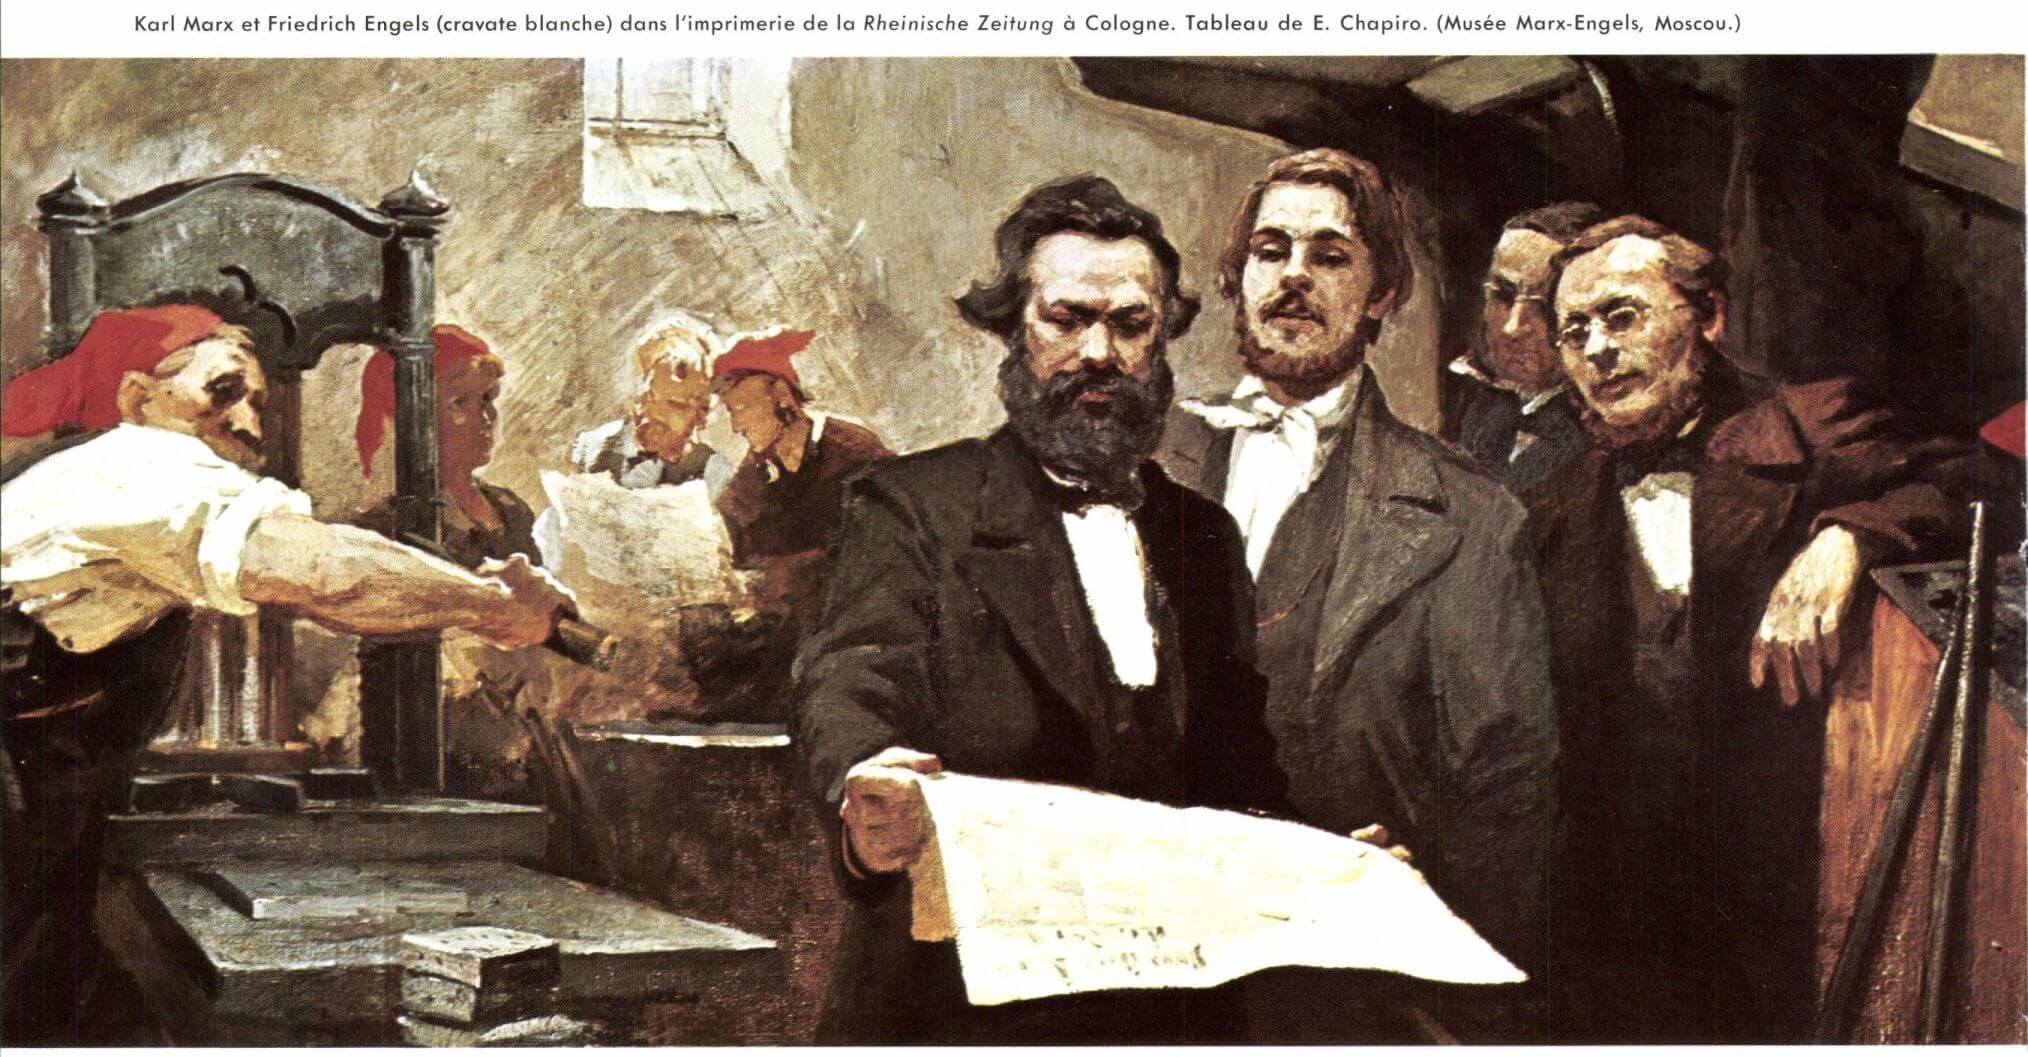 Karl Marx y Friedrich Engels en la imprenta Rheinische Zeitung en Coloni